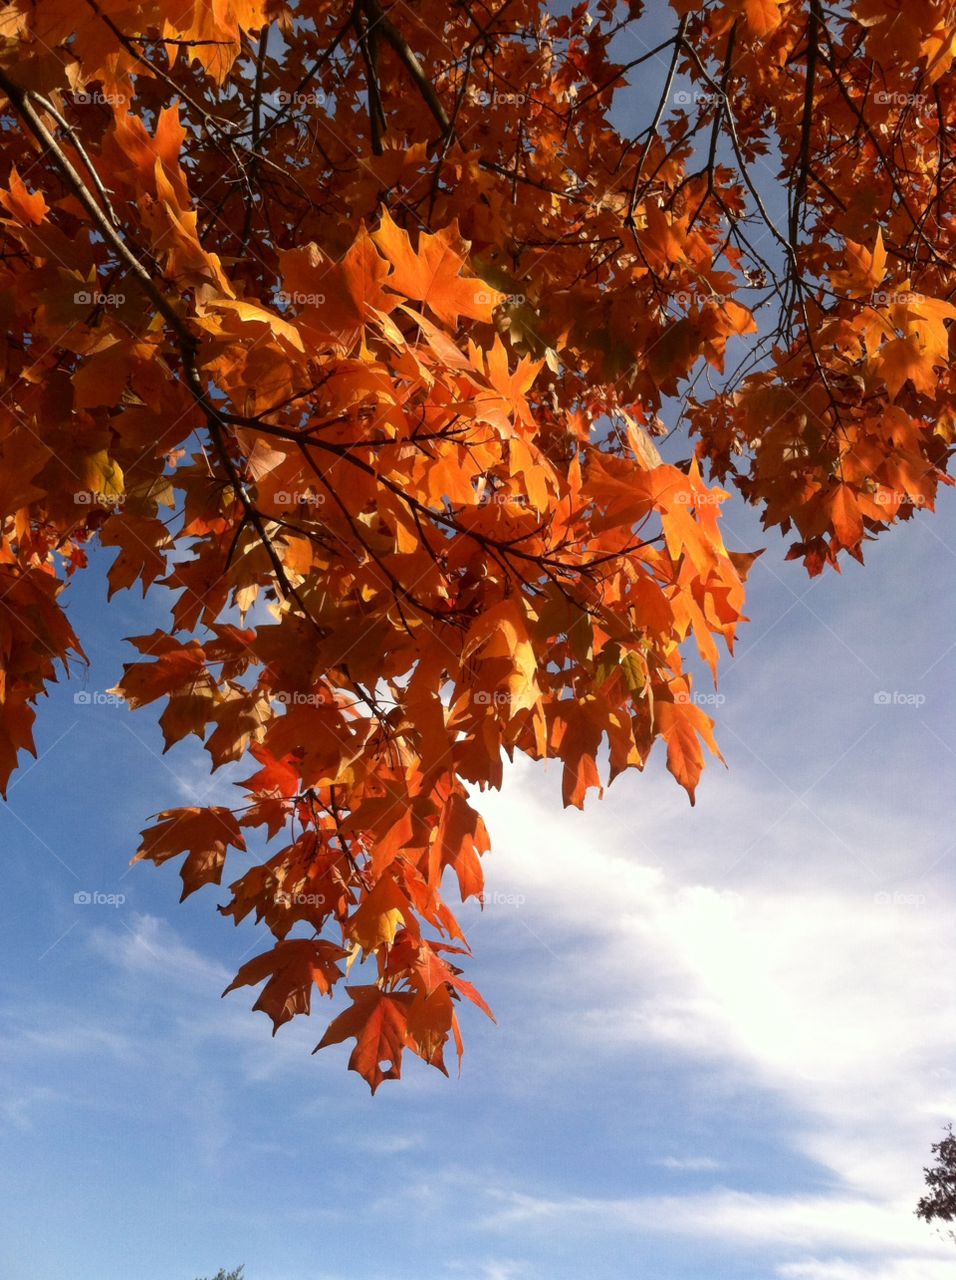 Fall, Leaf, Maple, No Person, Tree